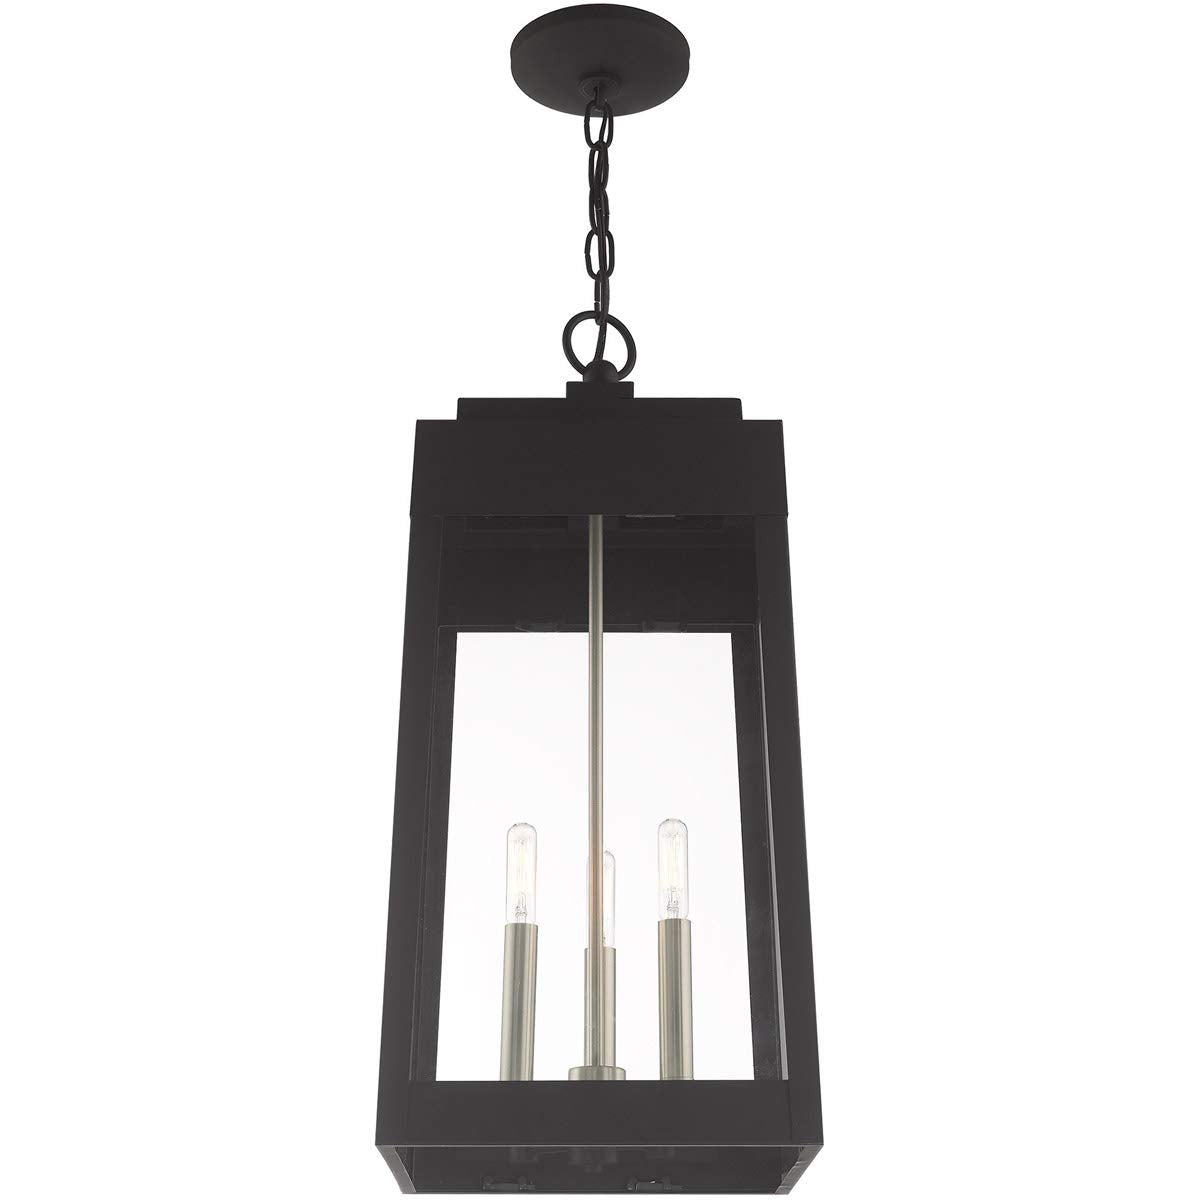 Livex Lighting 20860-04 Oslo - 24.5" Three Light Outdoor Hanging Lantern, Black Finish with Clear Glass